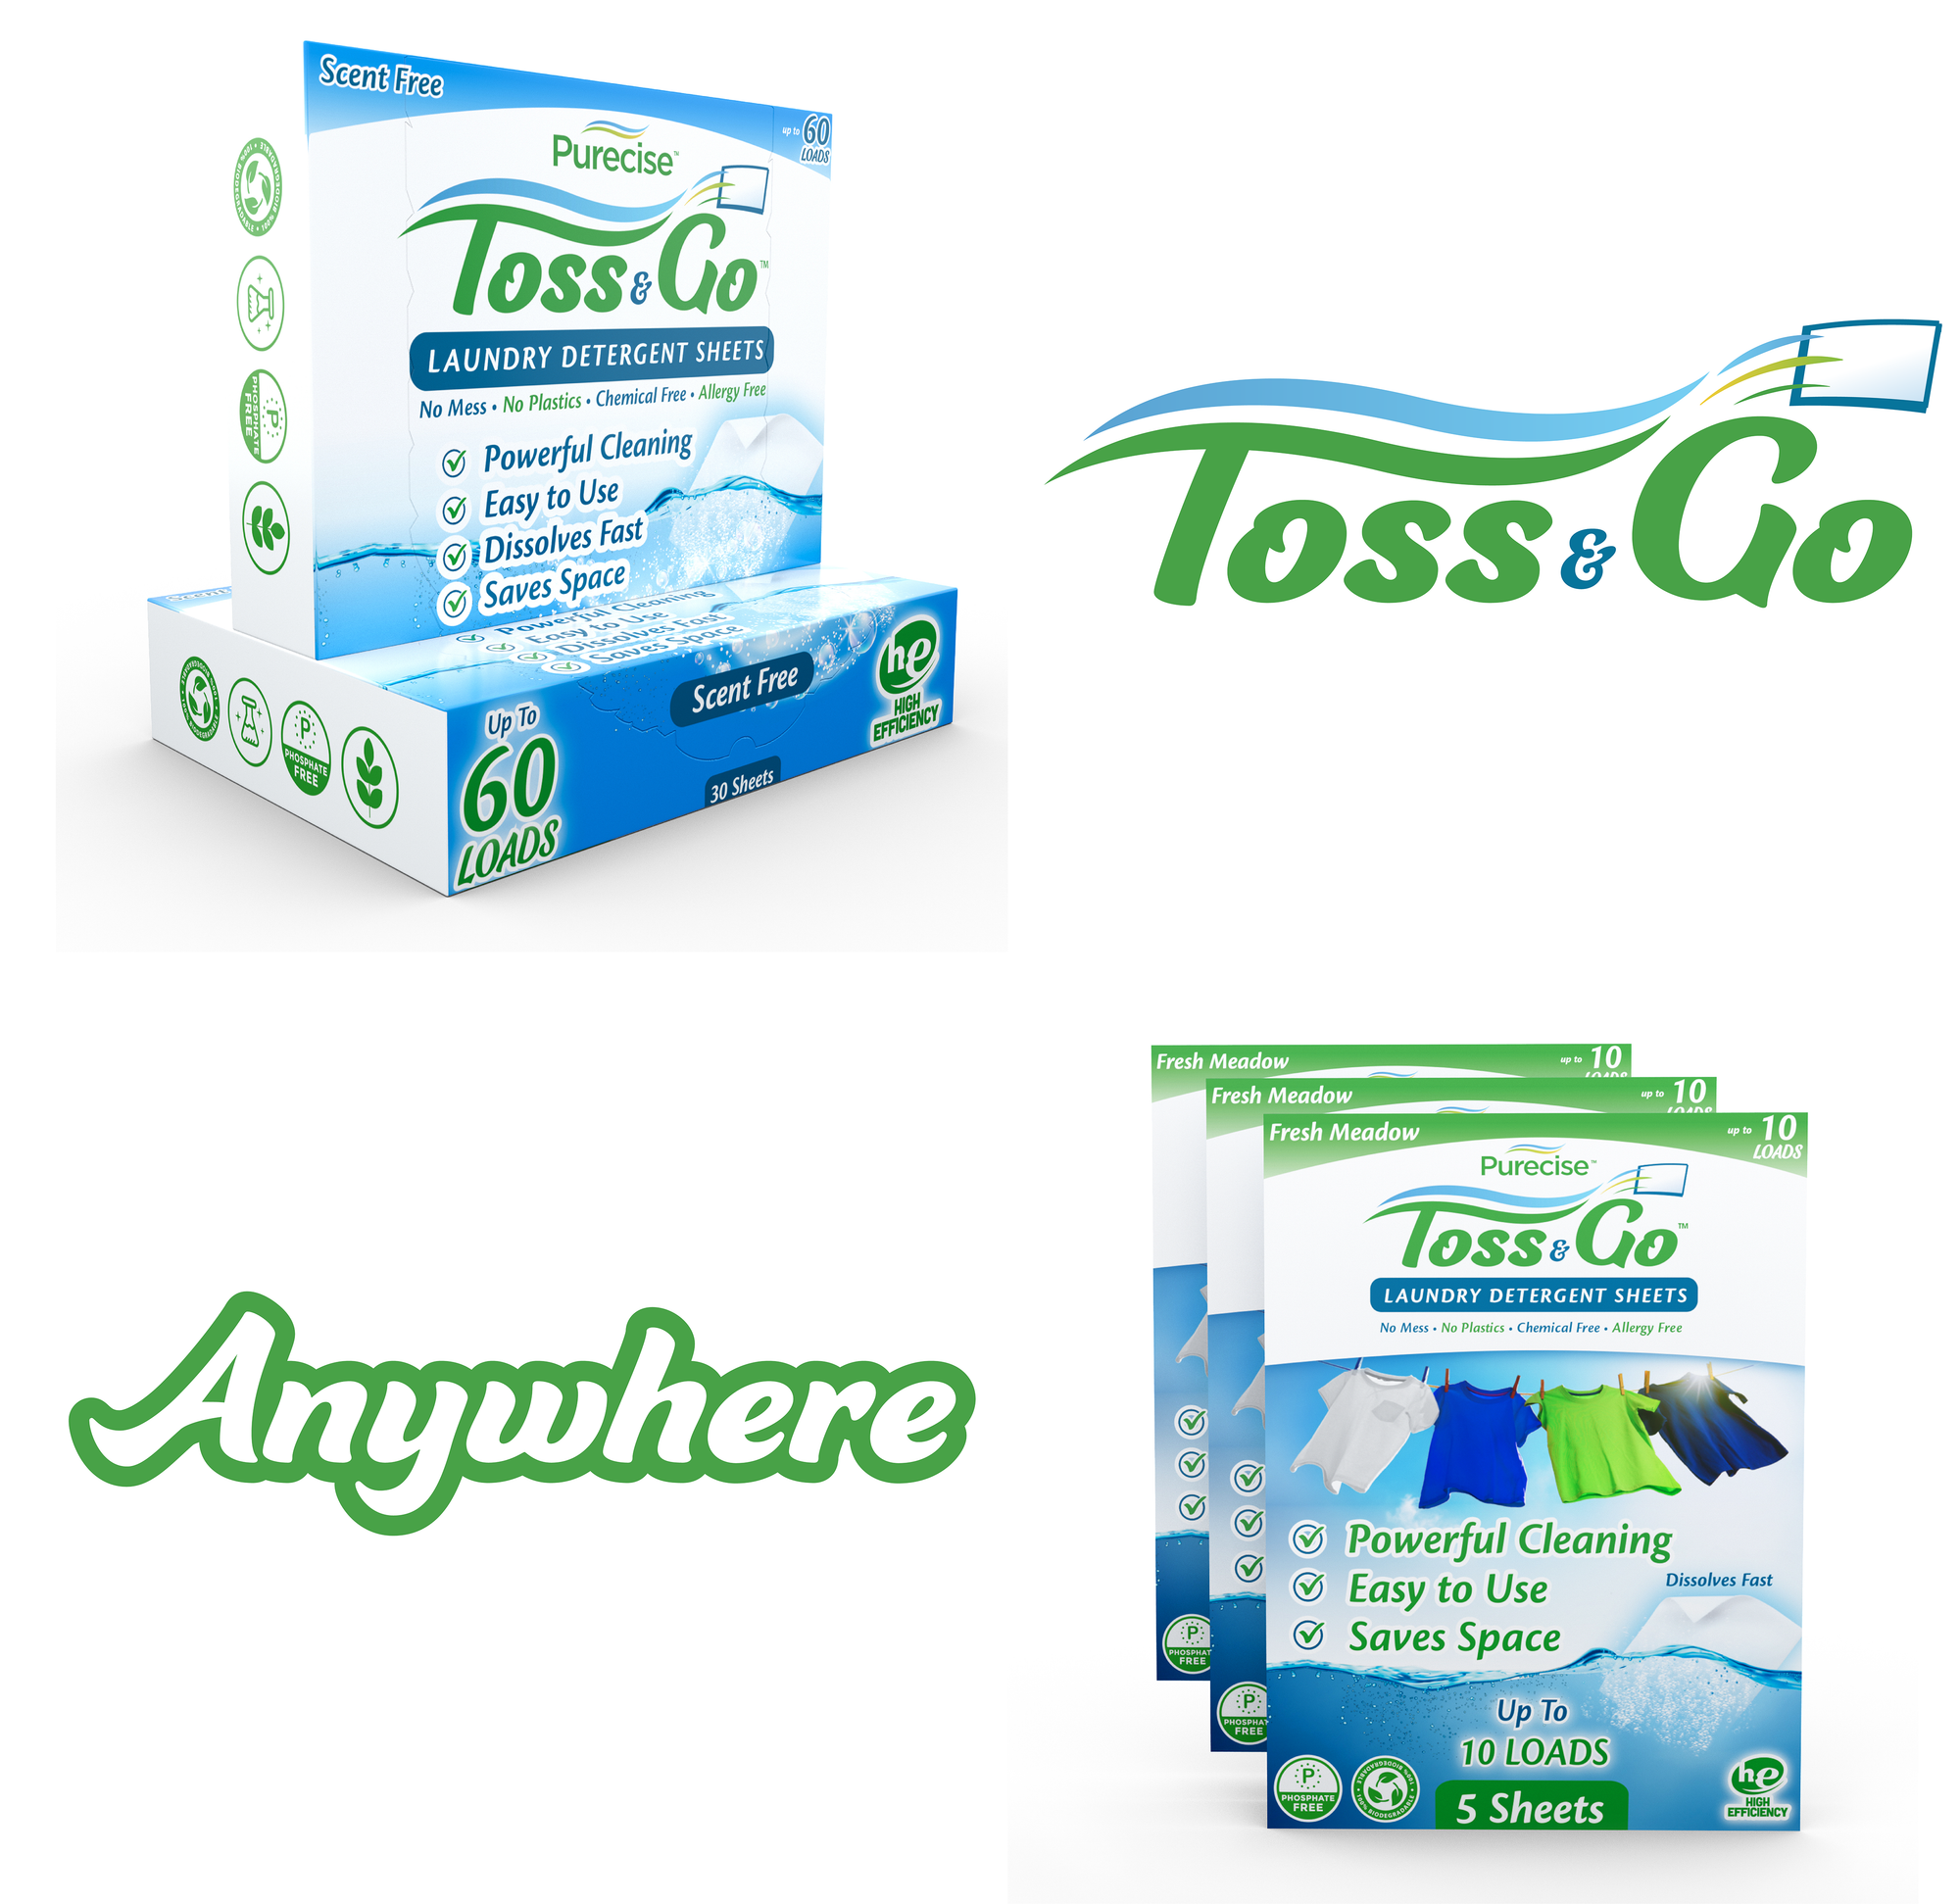 Toss & Go Home & Away Bundle